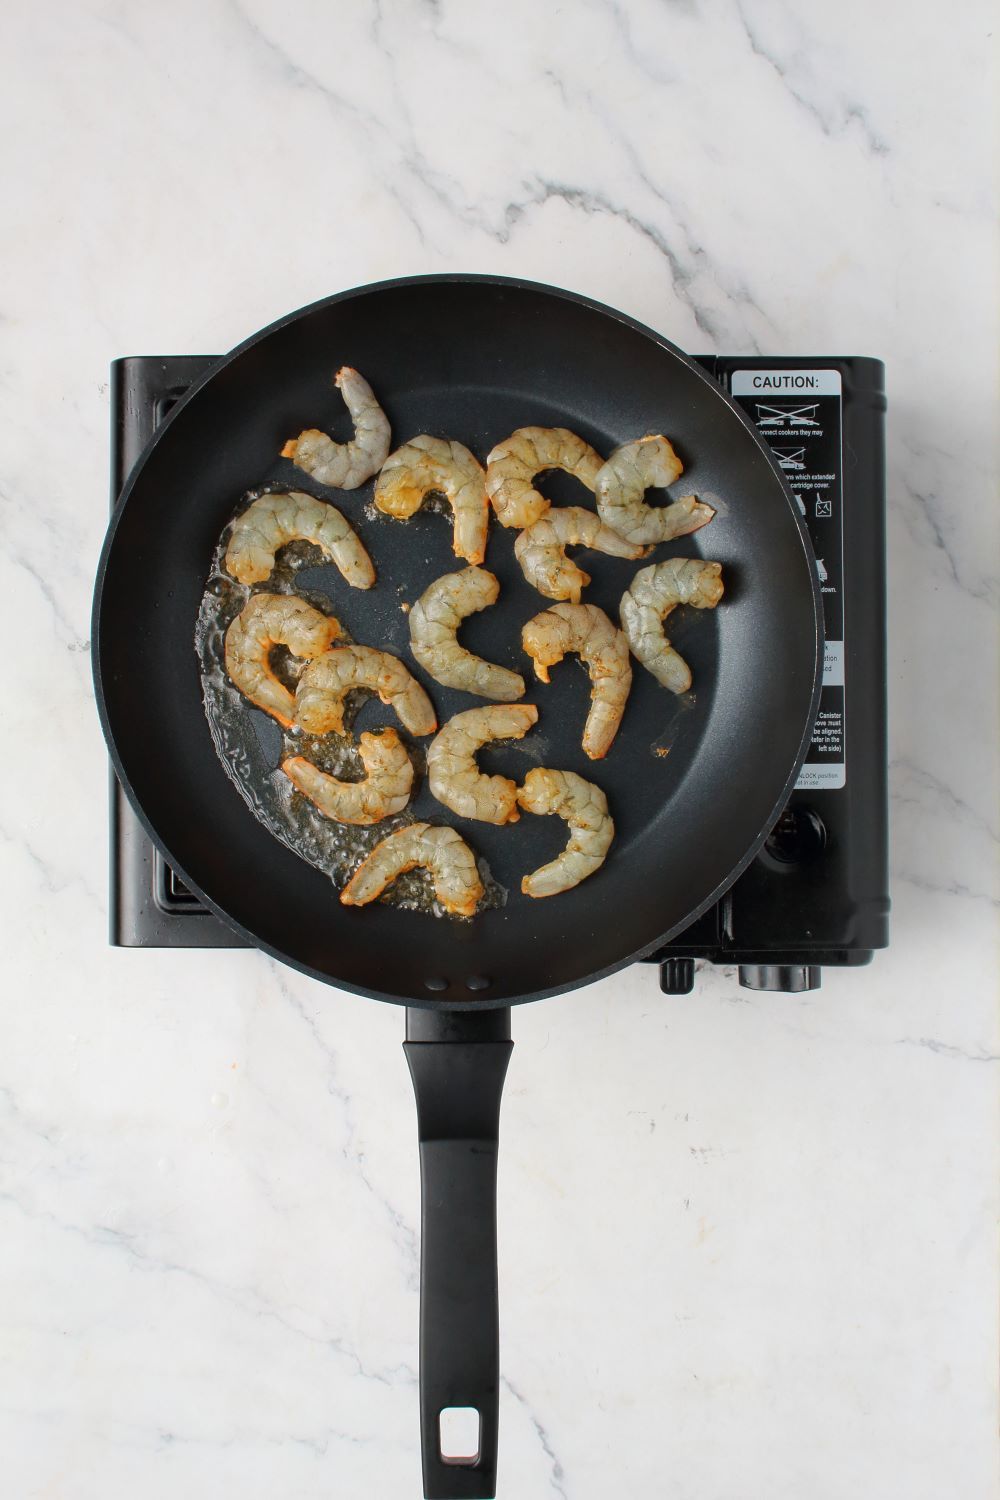 Frying the shrimp 